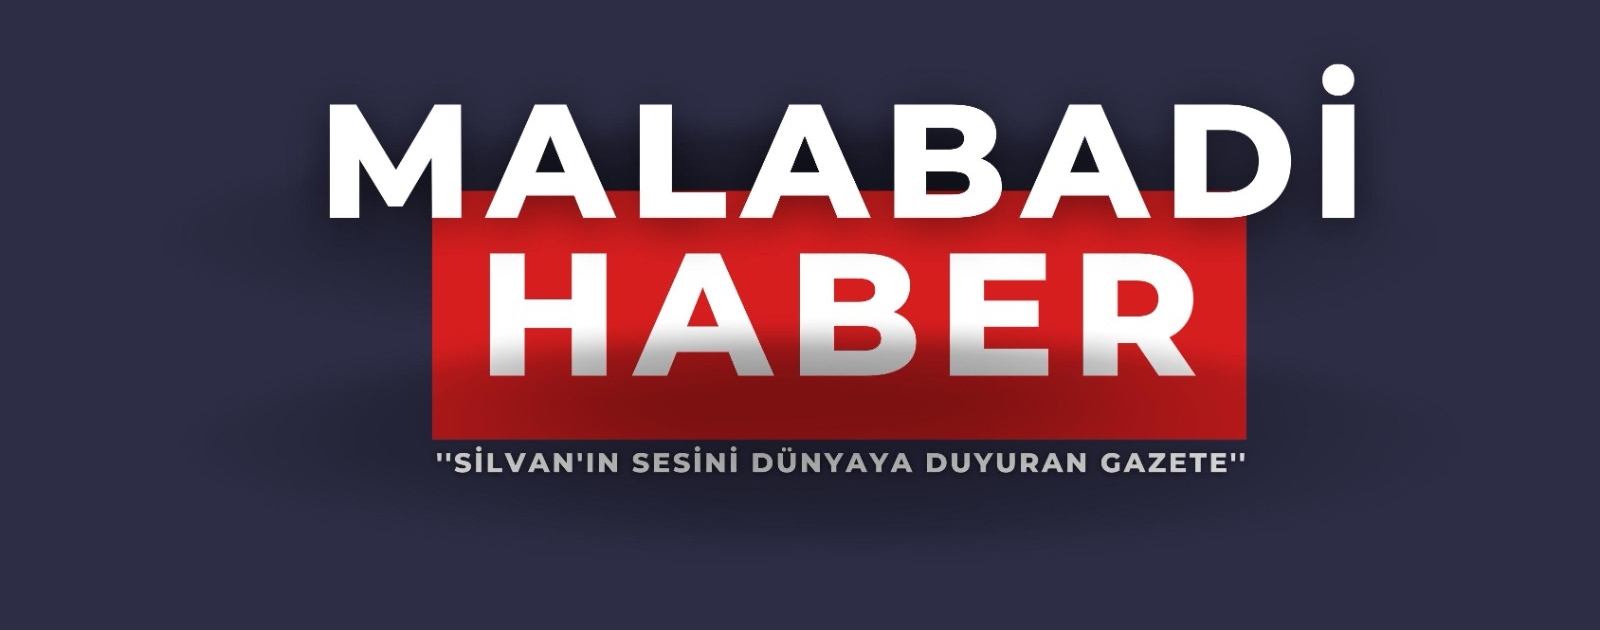 Malabadi HABER